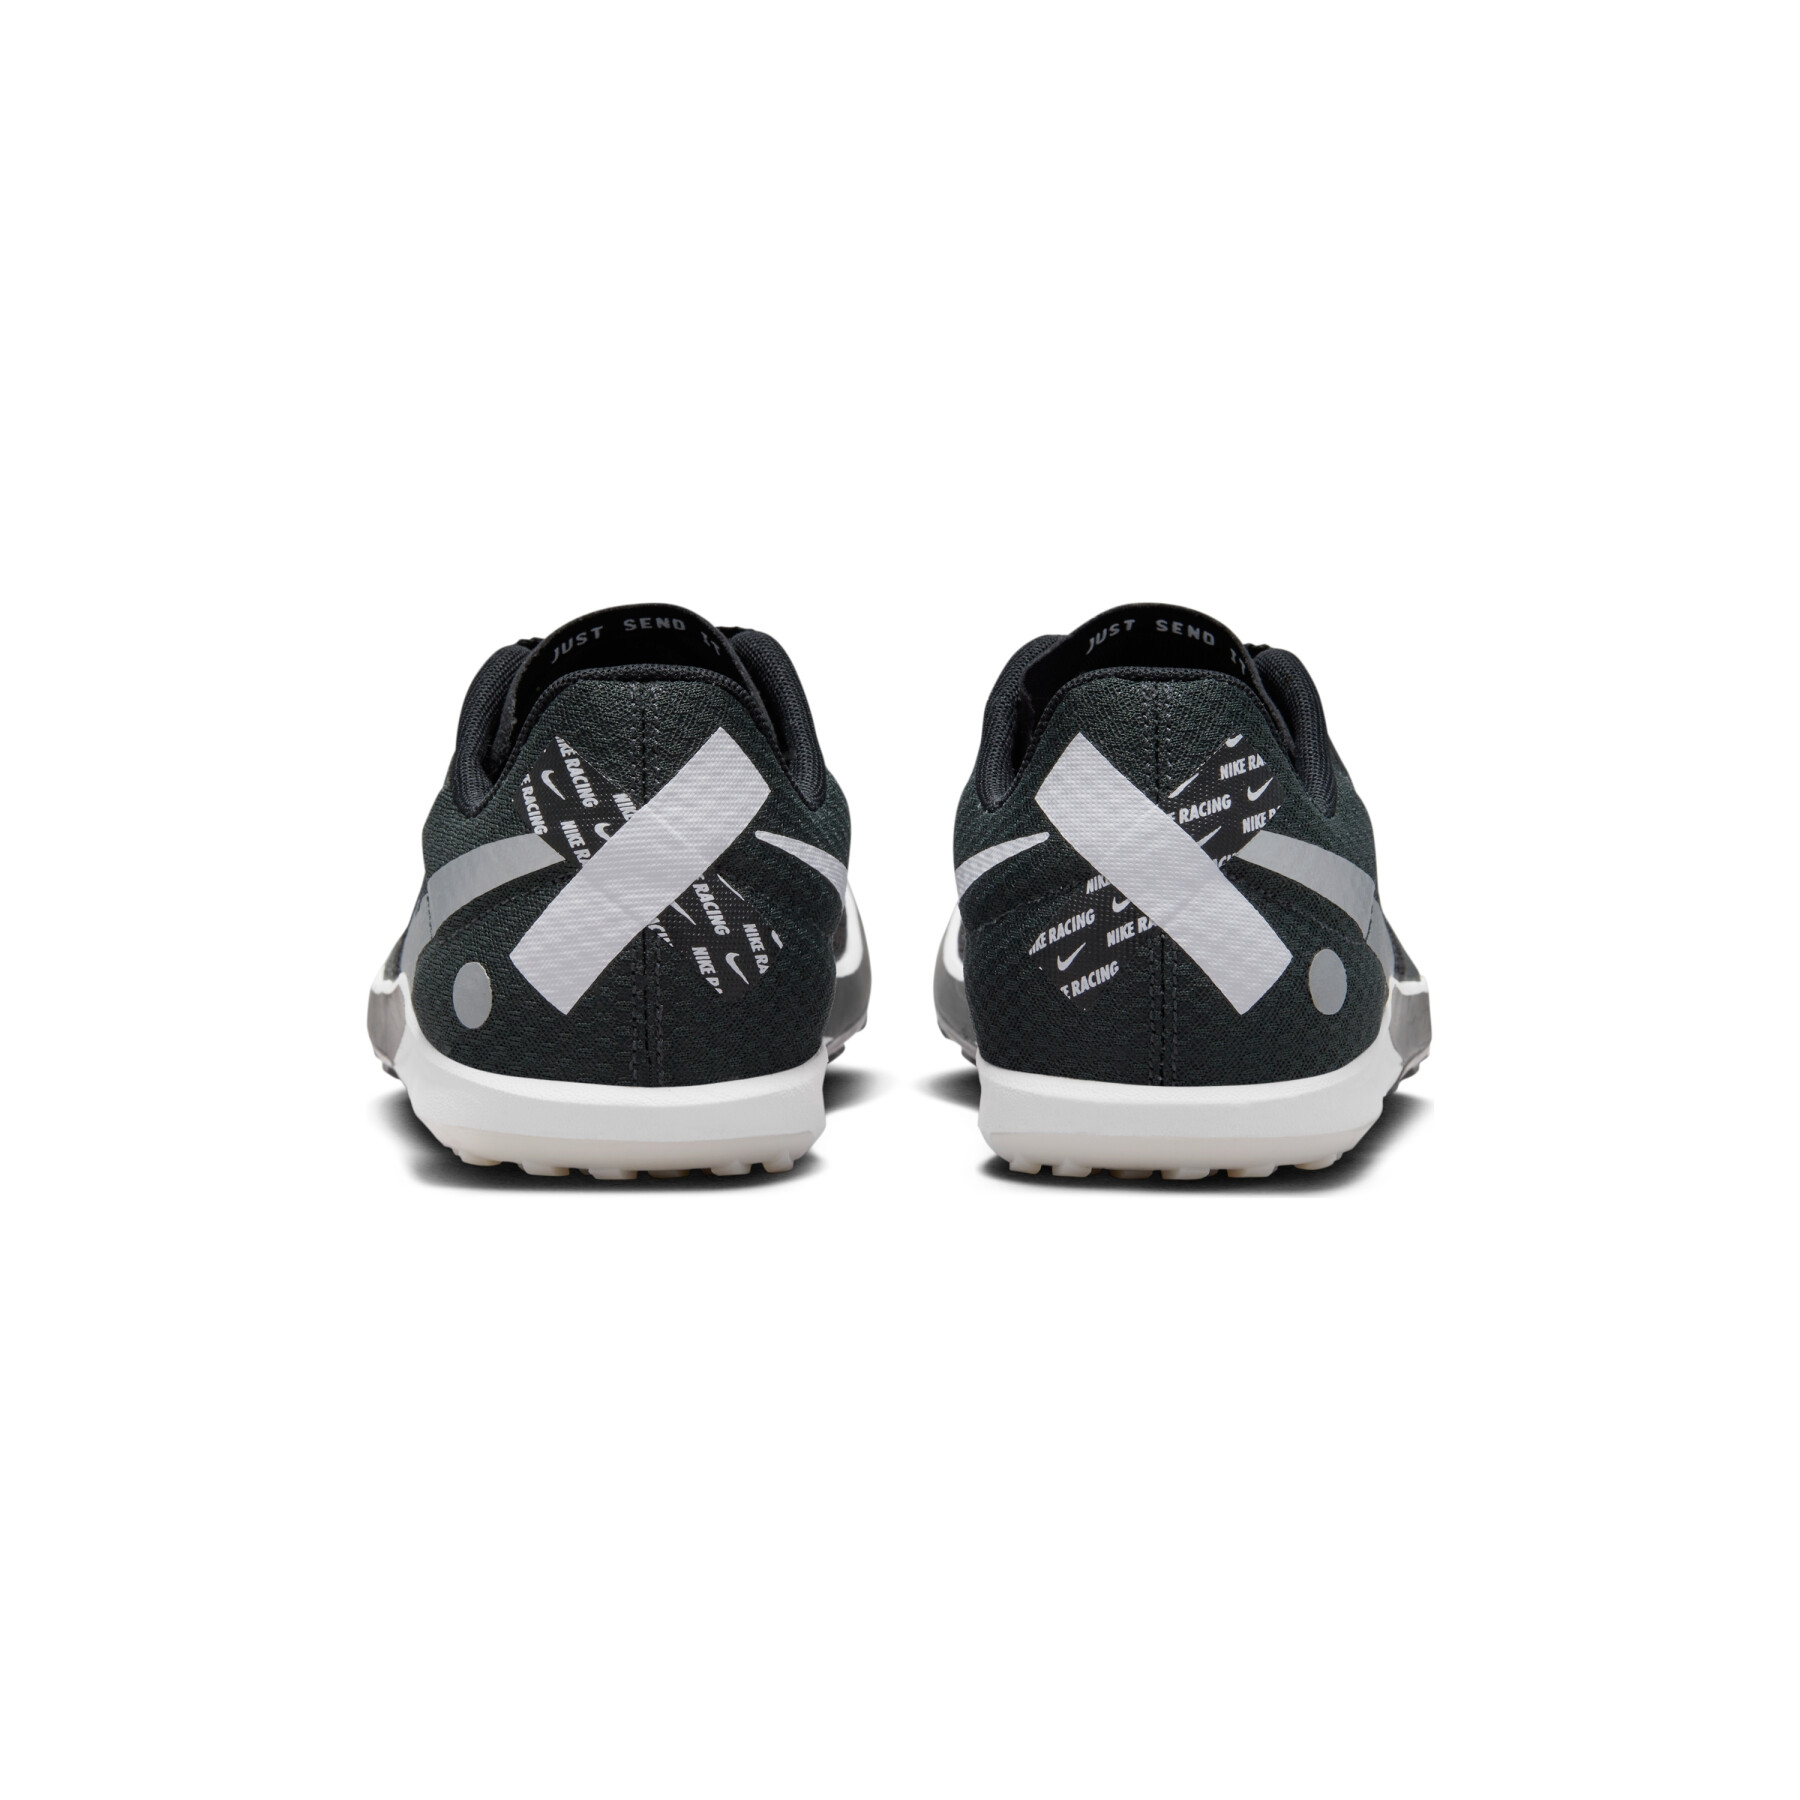 Cross training shoes Nike Rival XC 6